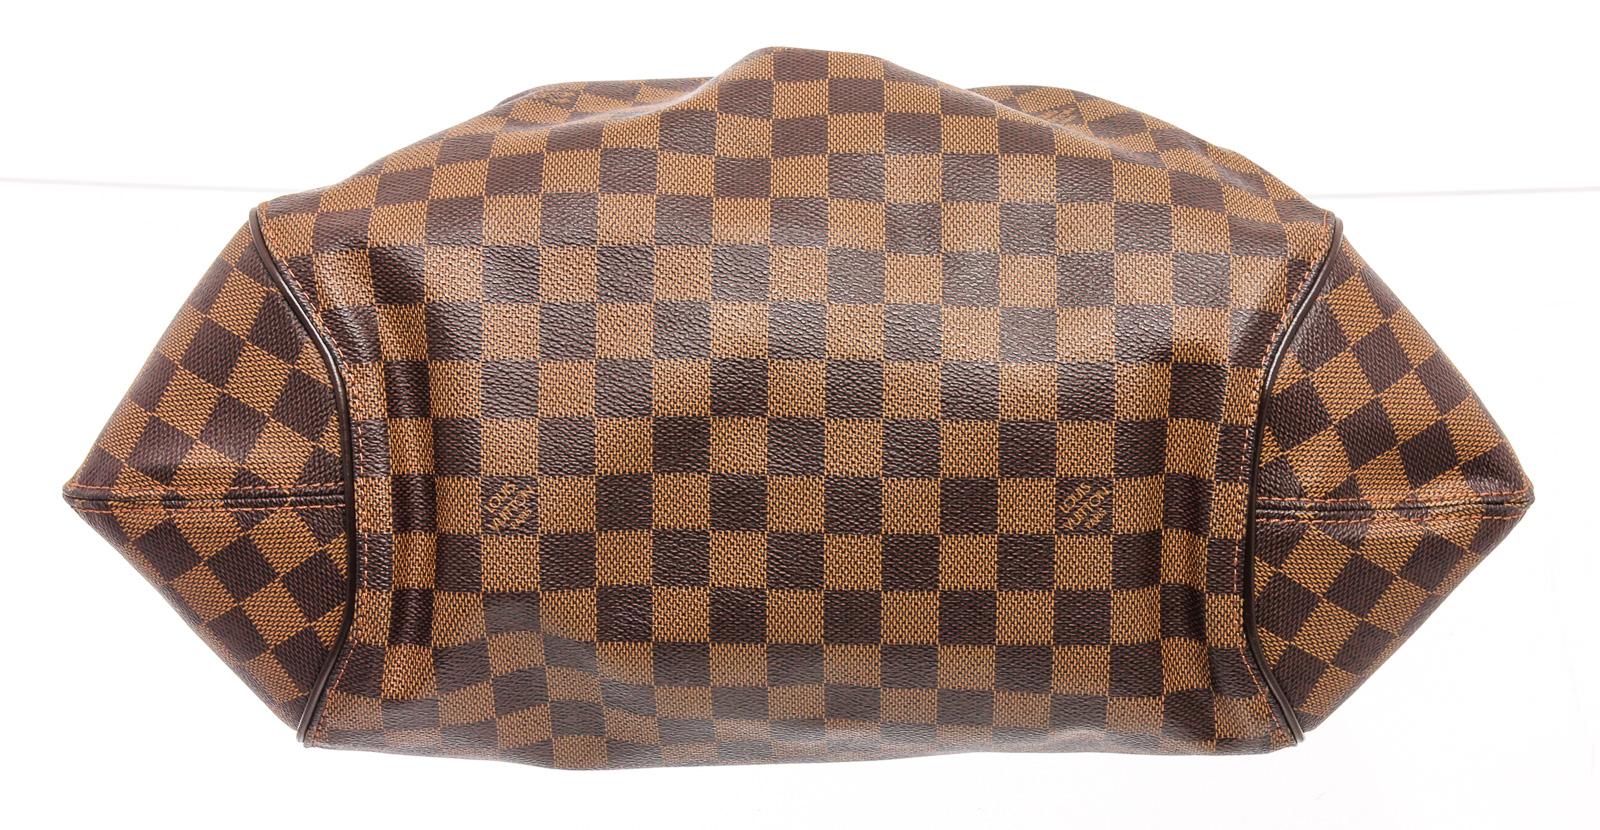 Women's or Men's Louis Vuitton Damier Ebene Canvas Leather Sistina PM Bag